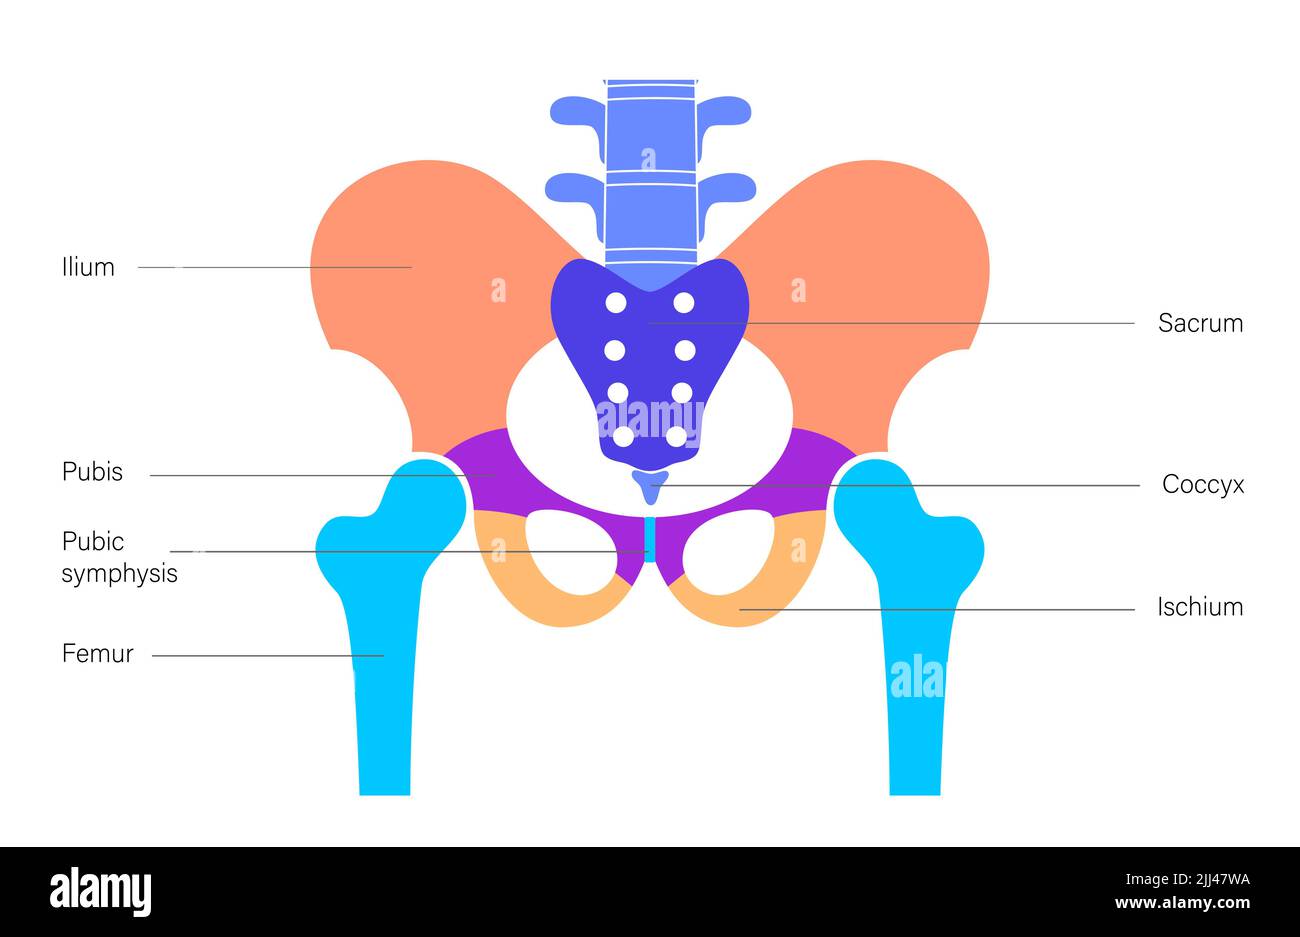 Pelvis anatomy, illustration Stock Photo - Alamy